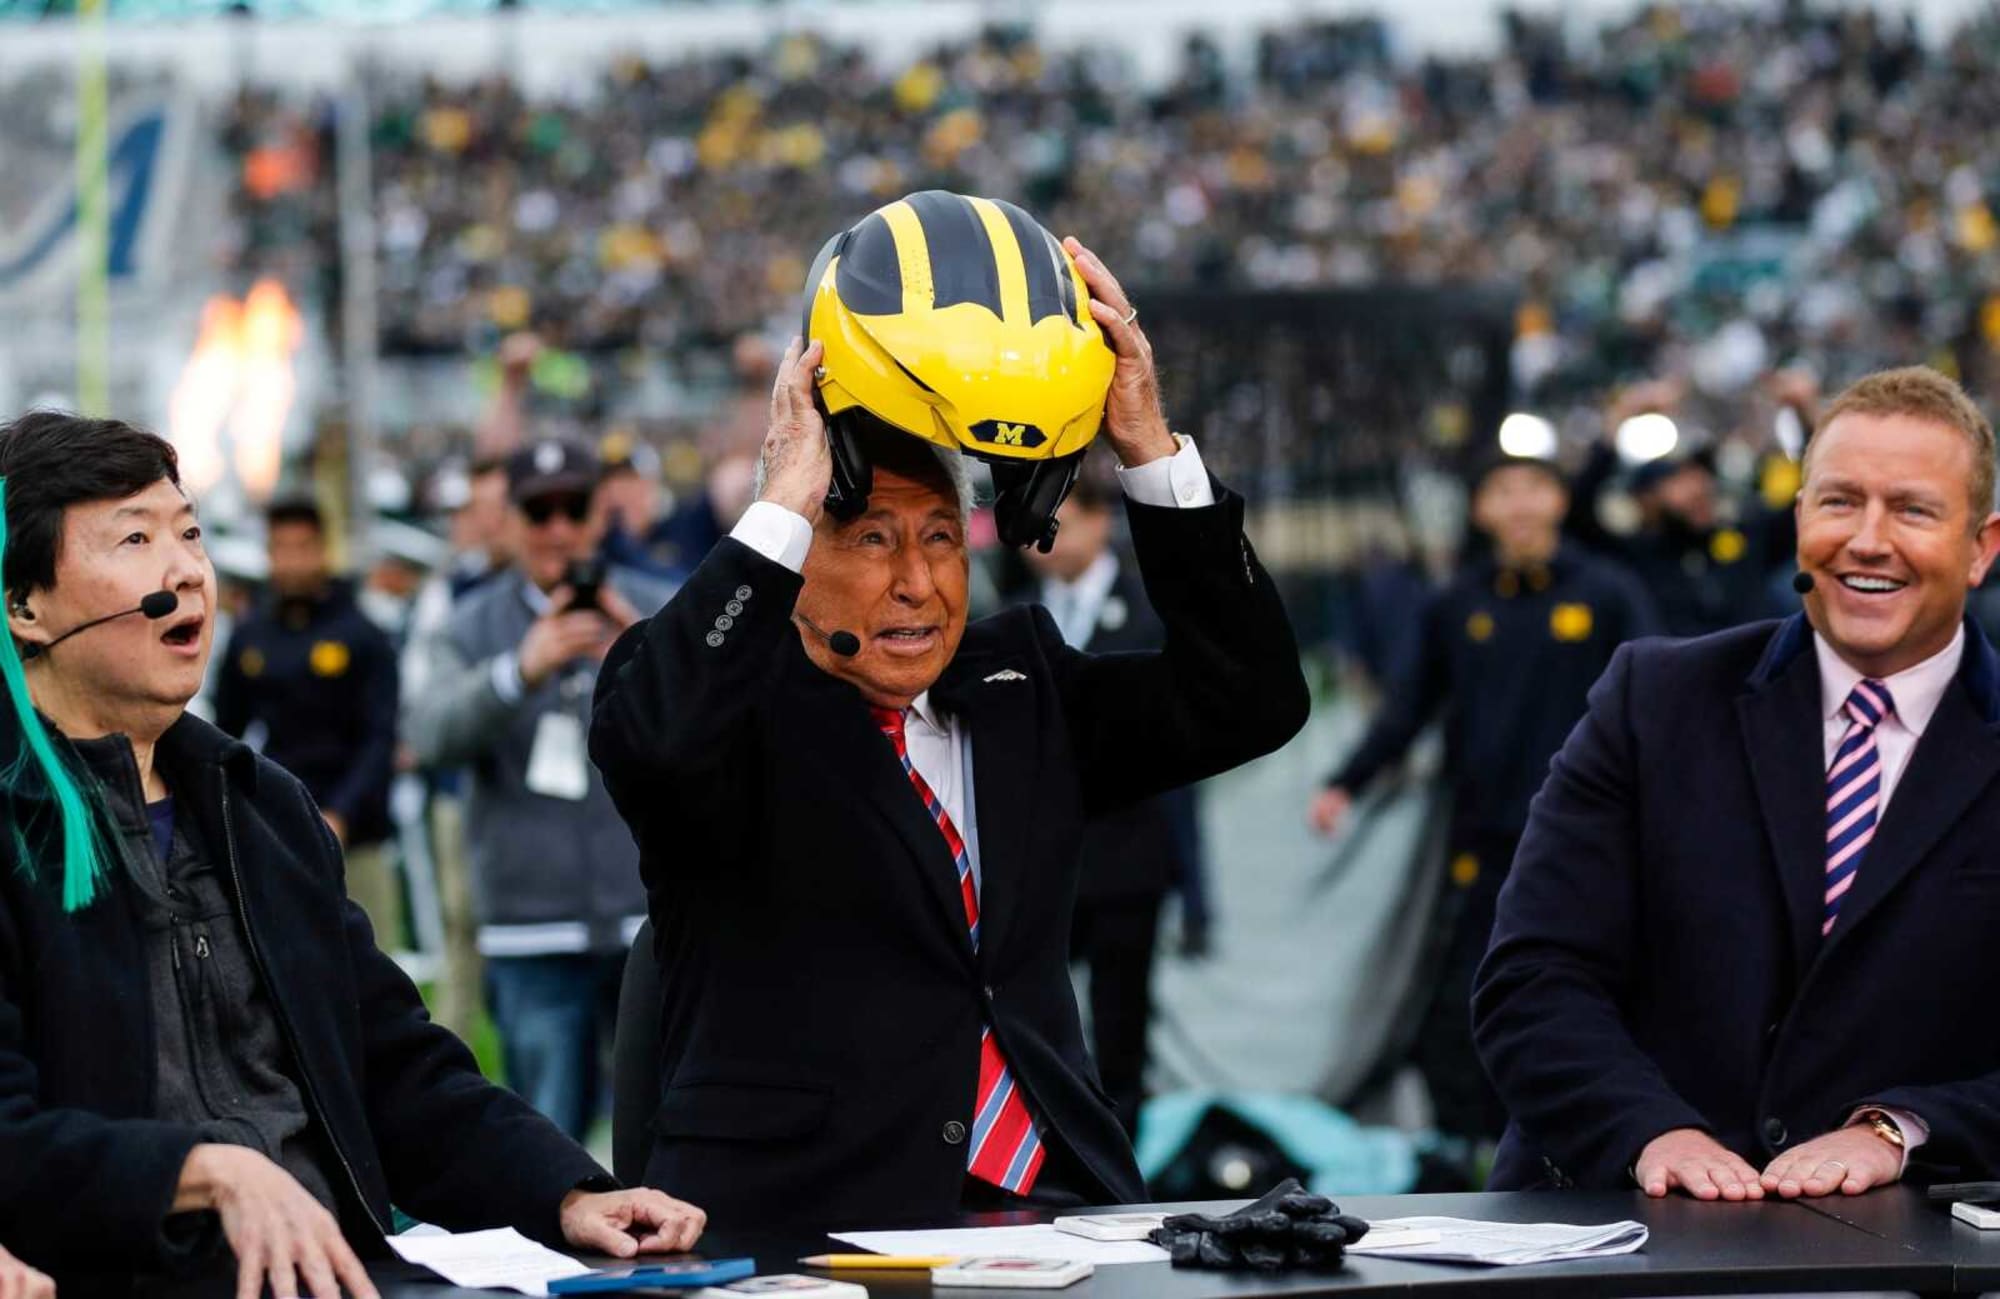 Duke football: What was the Lee Corso headgear pick this week?